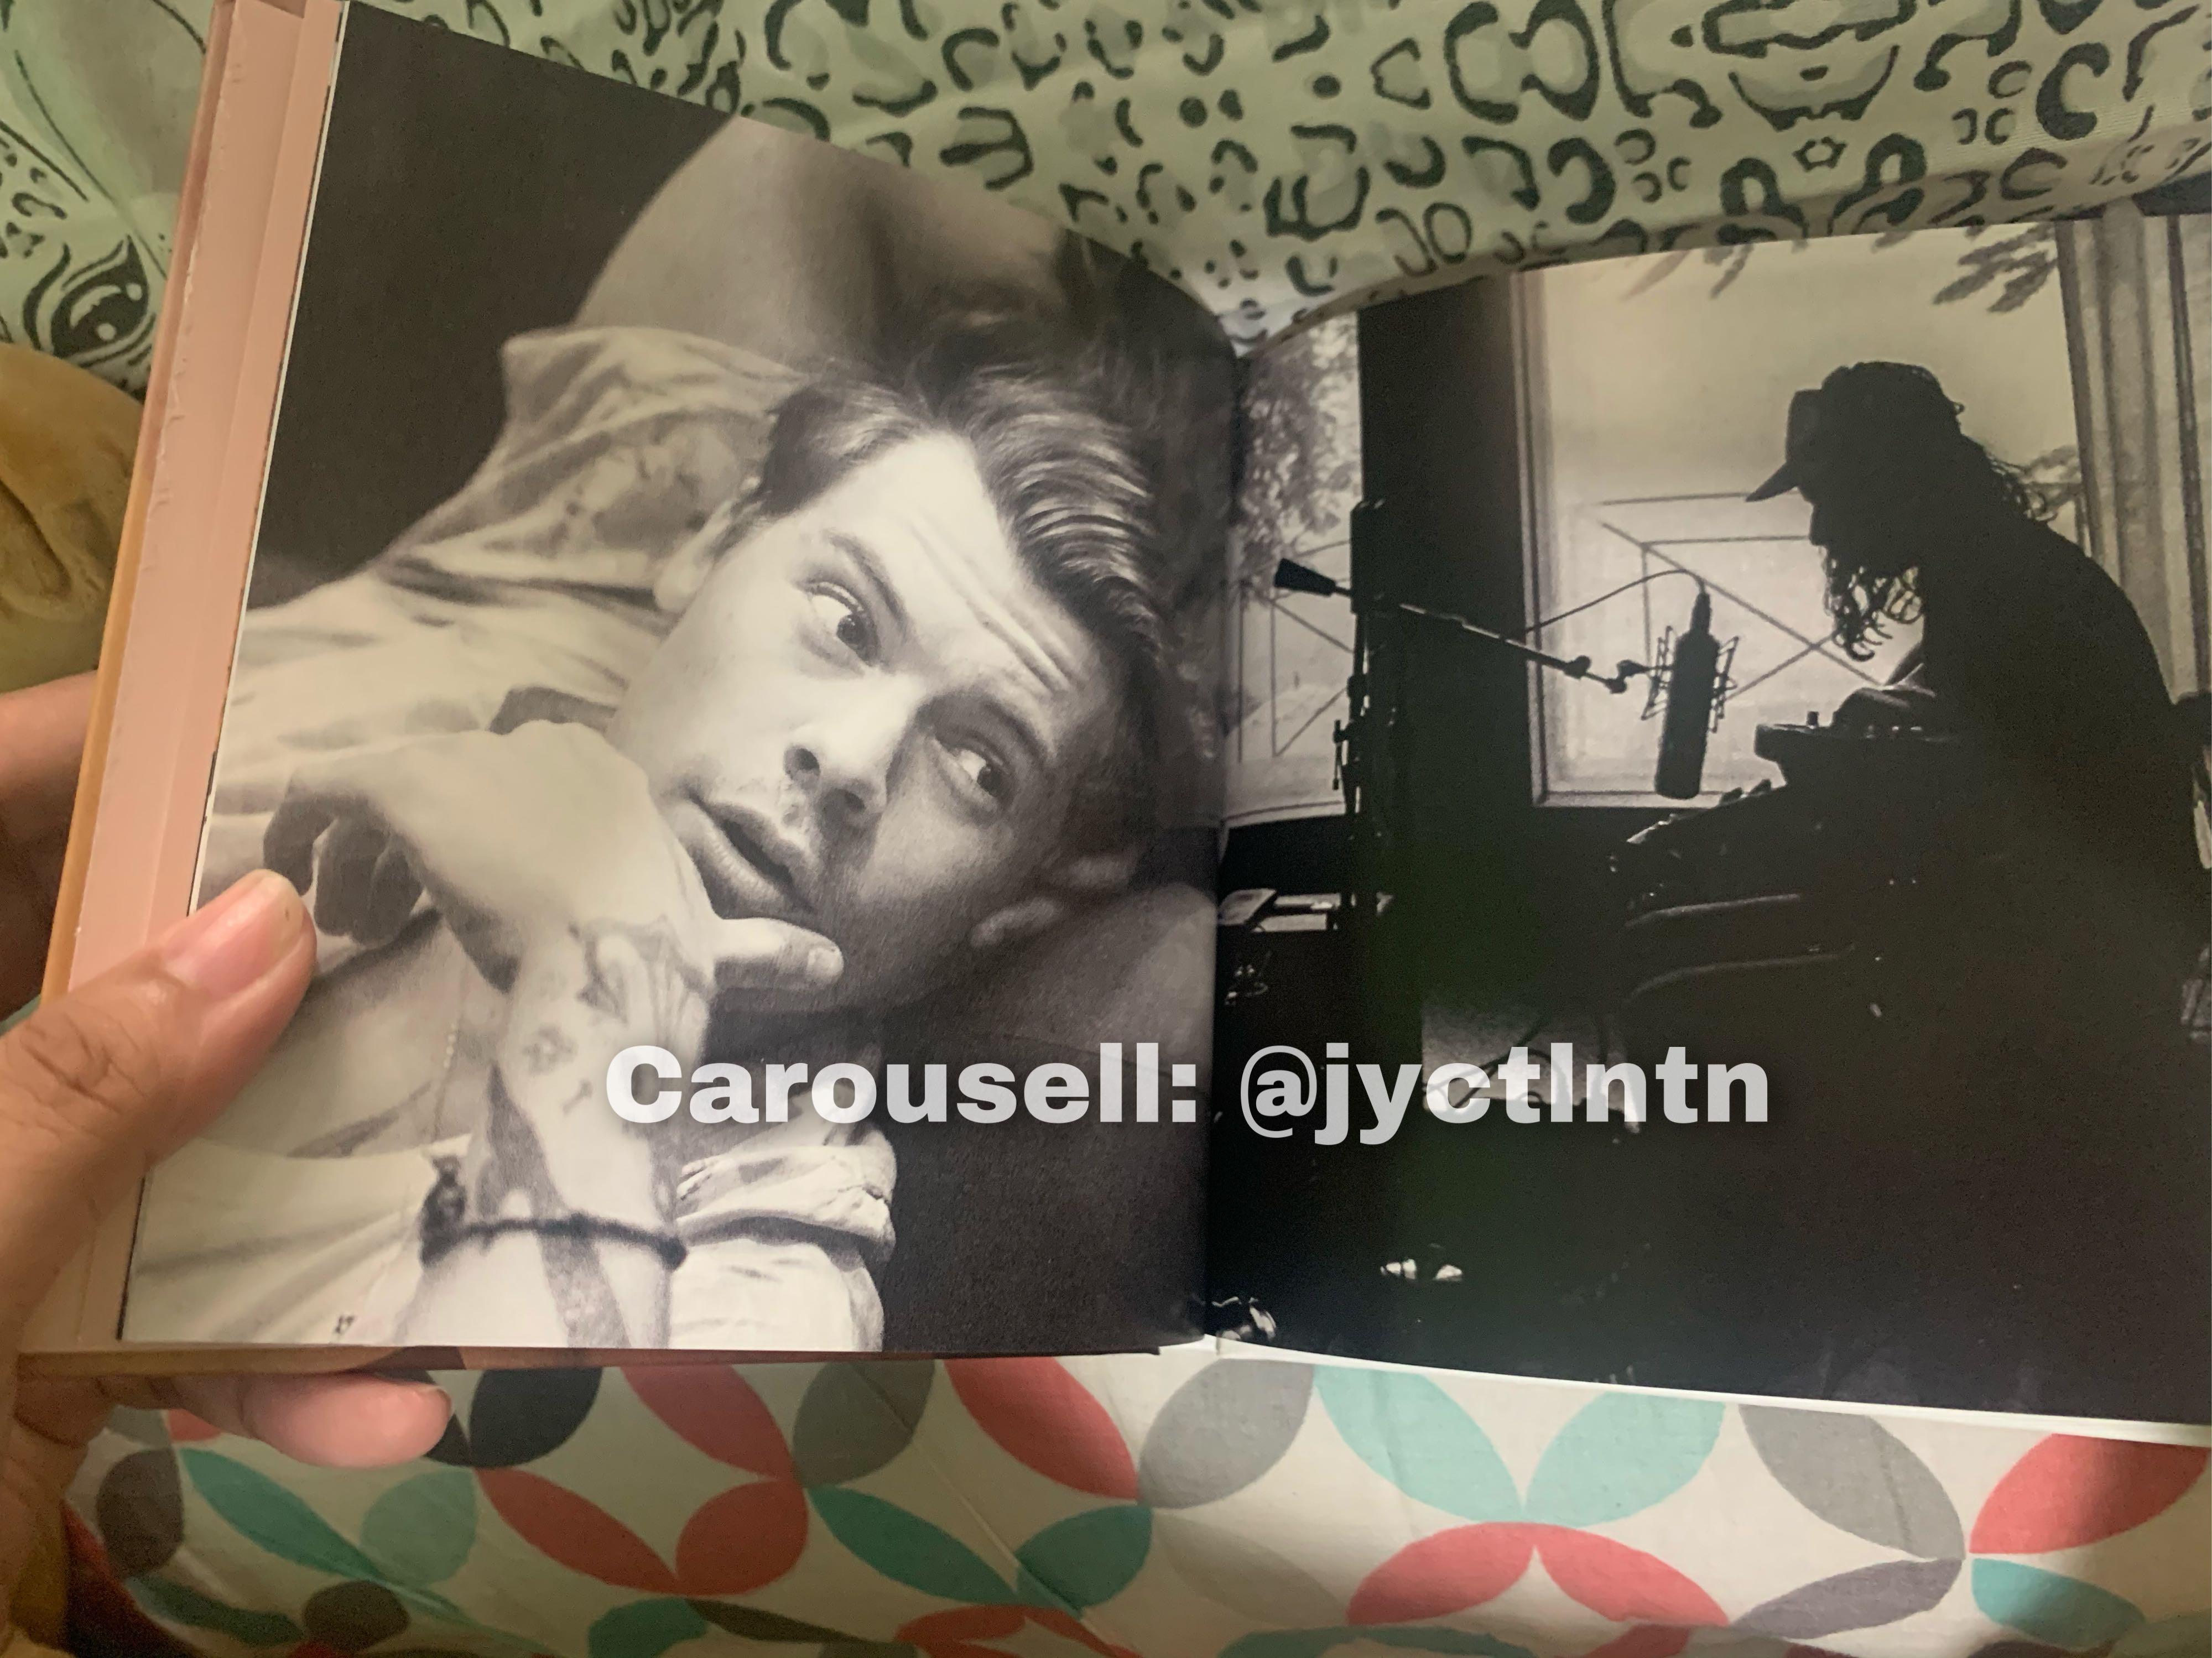 Rare Harry Styles Deluxe Album Music Media Cd S Dvd S Other Media On Carousell